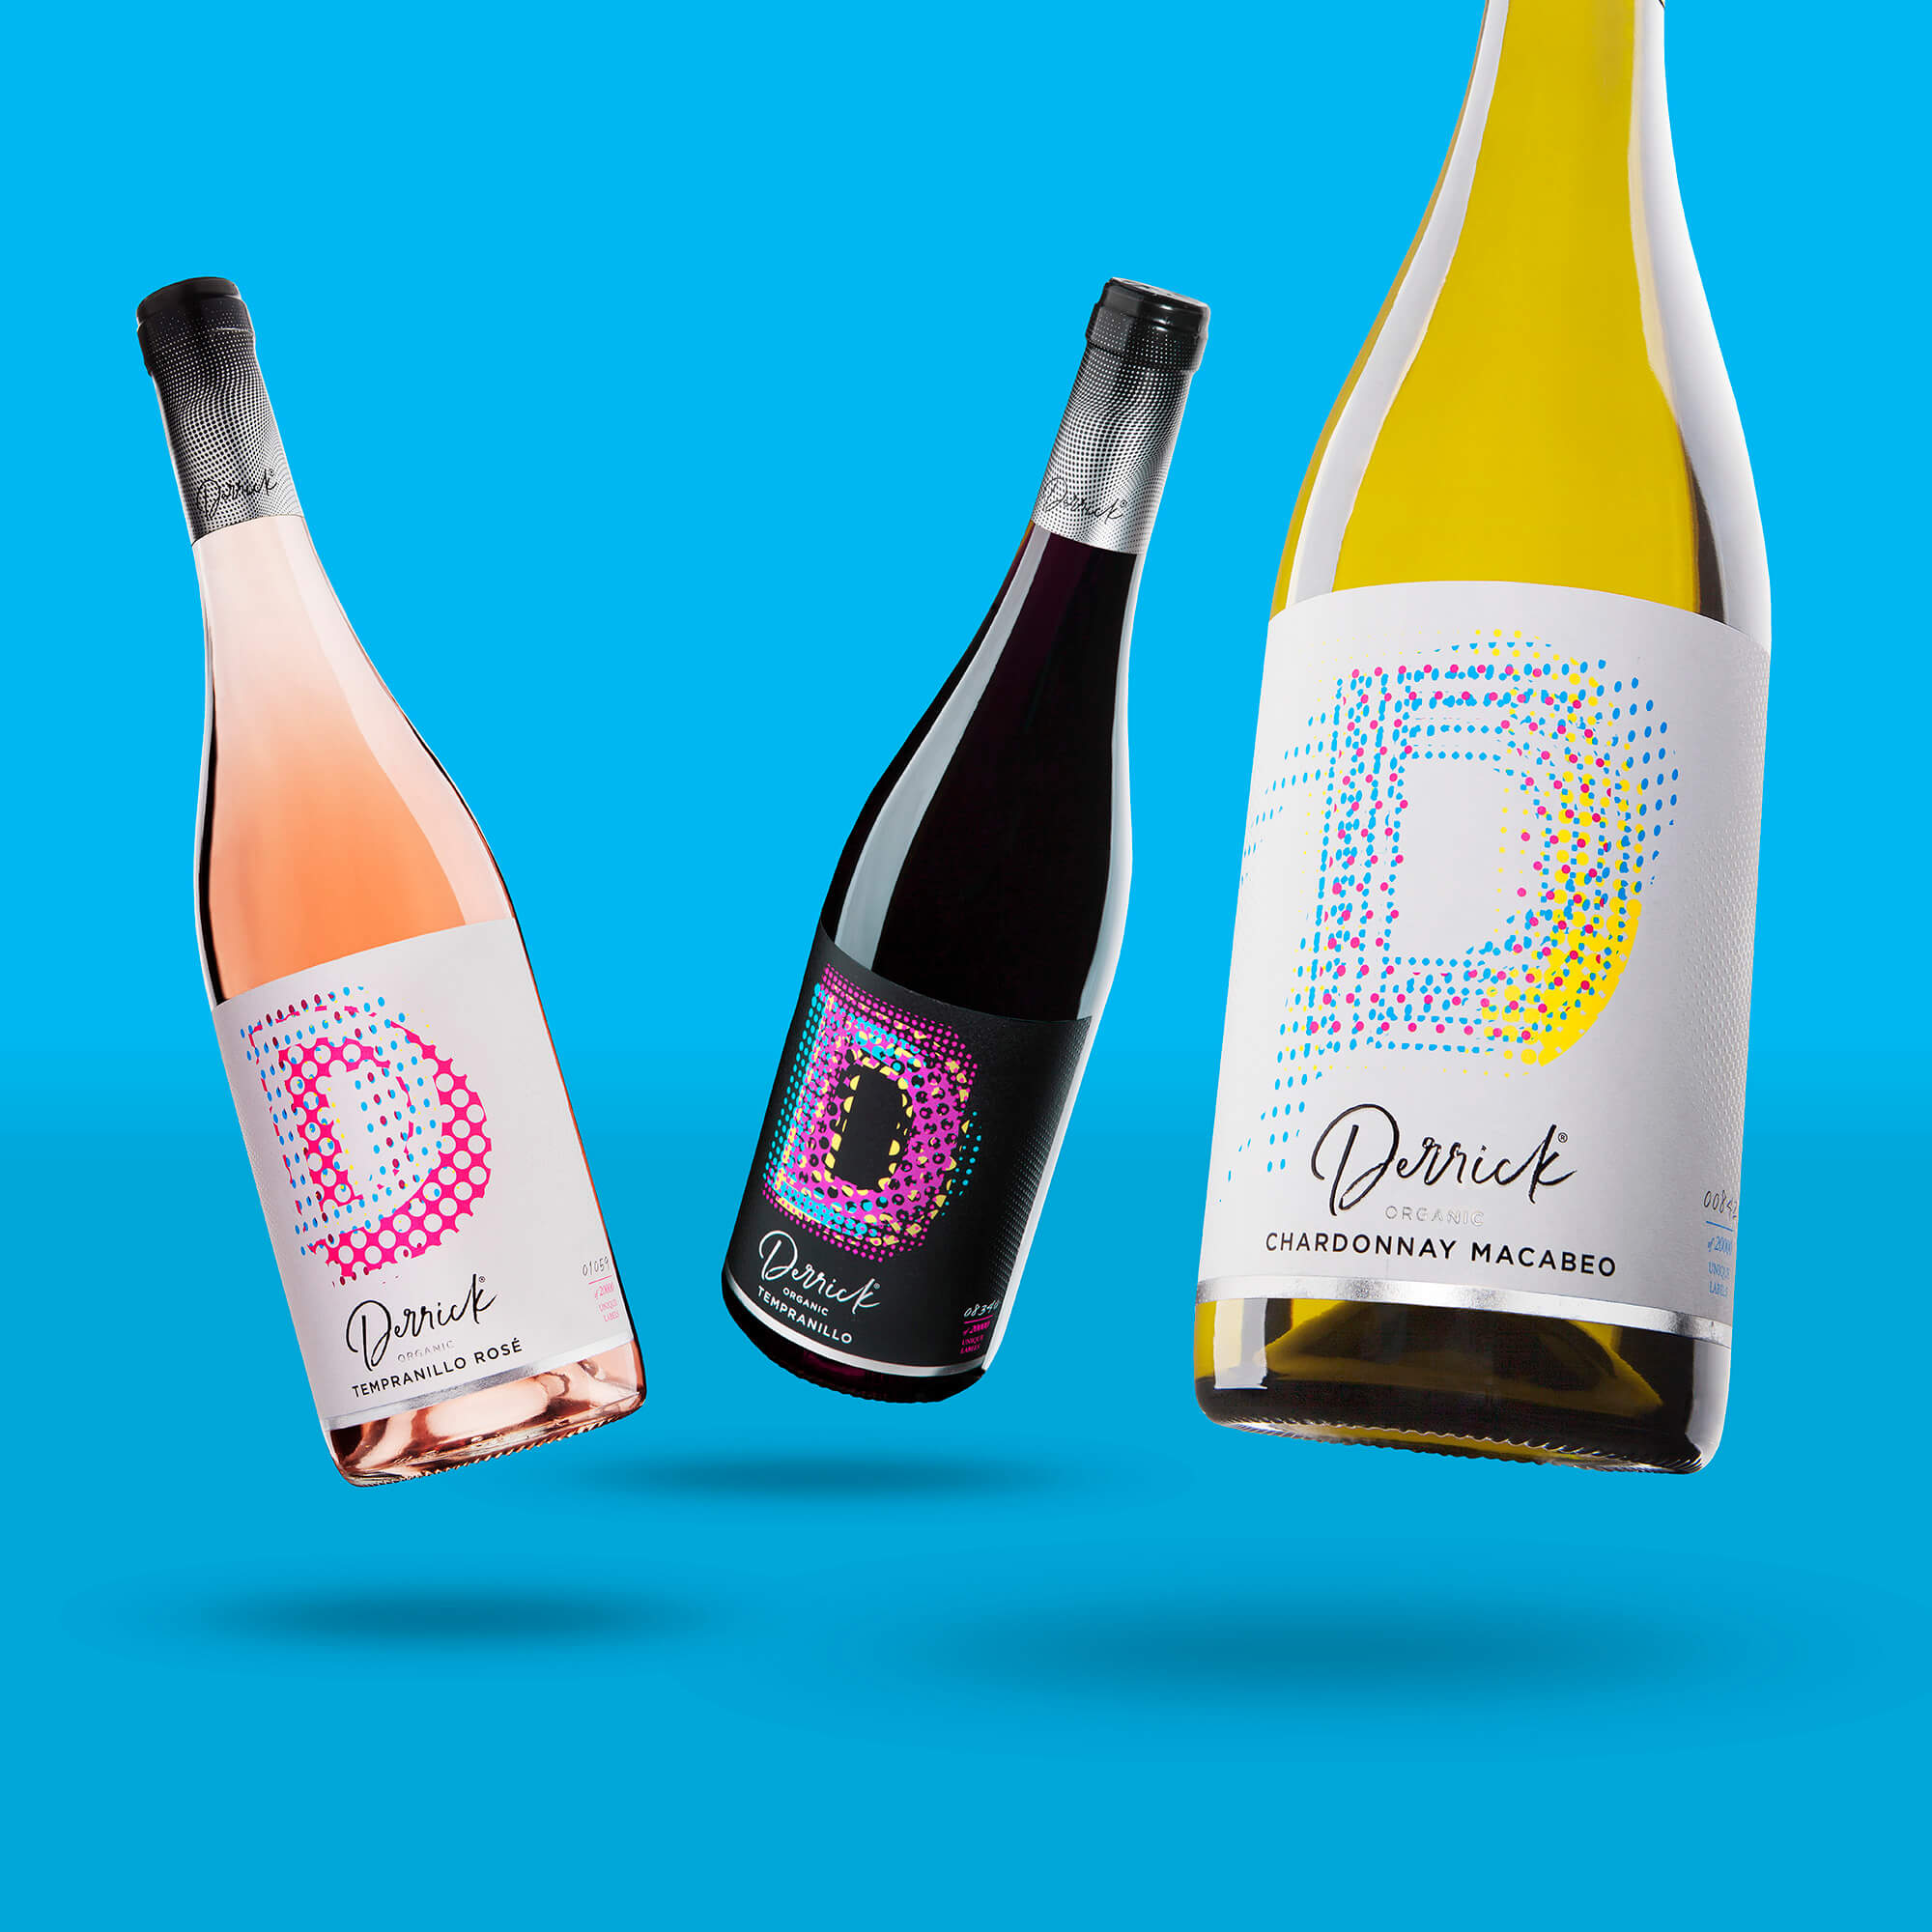 Premium wines, wine branding, Derrick neleman, premium wine labels